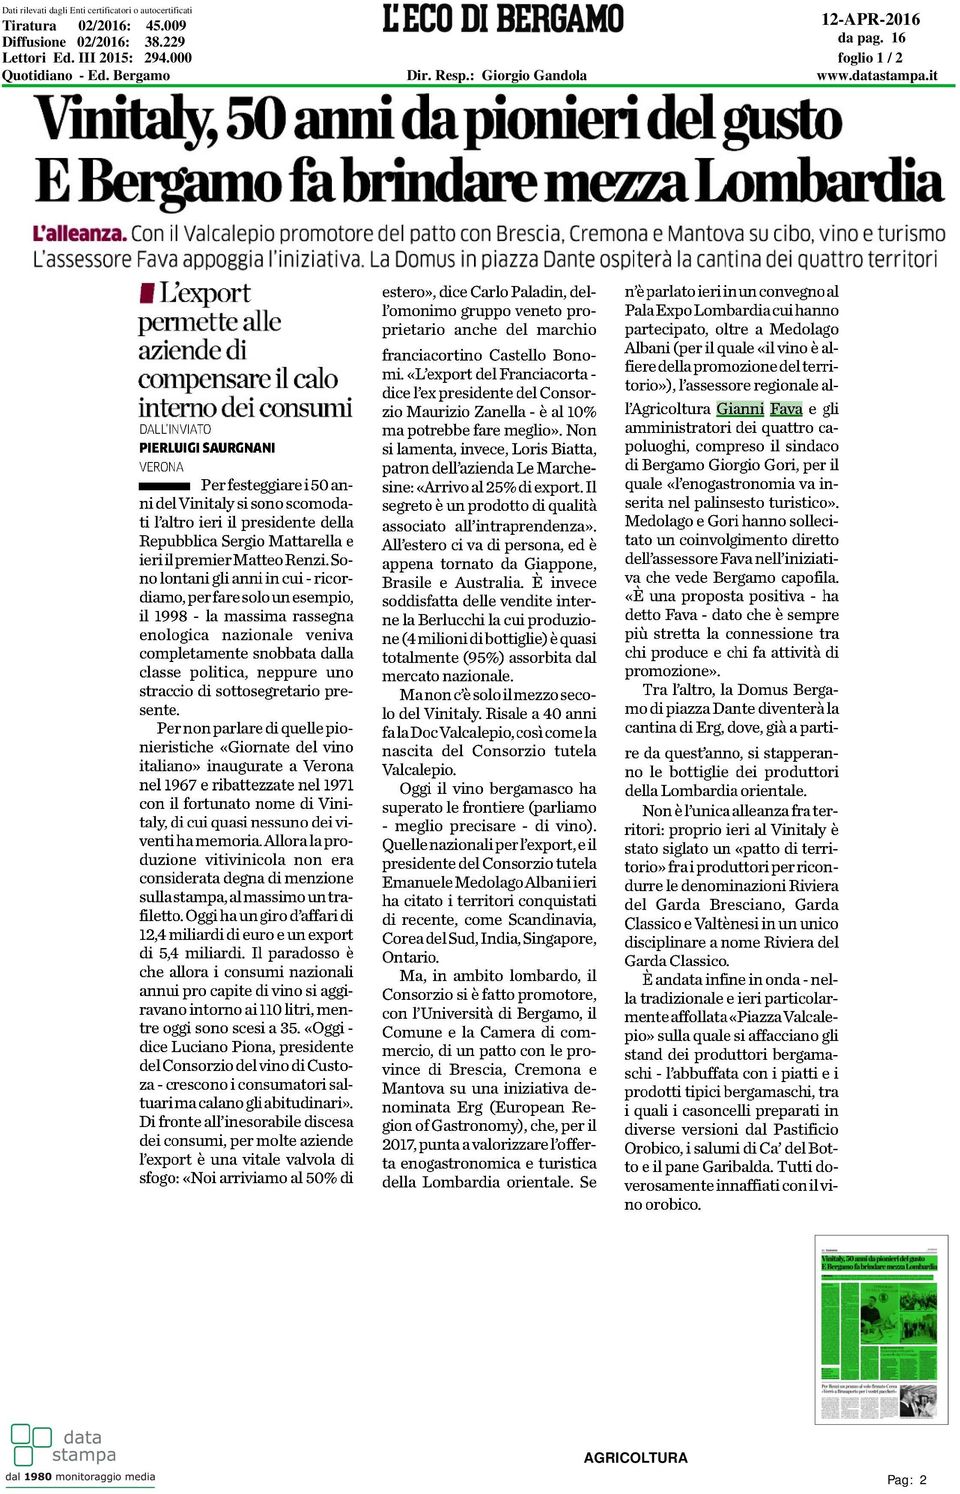 III 2015: 294.000 Quotidiano - Ed.